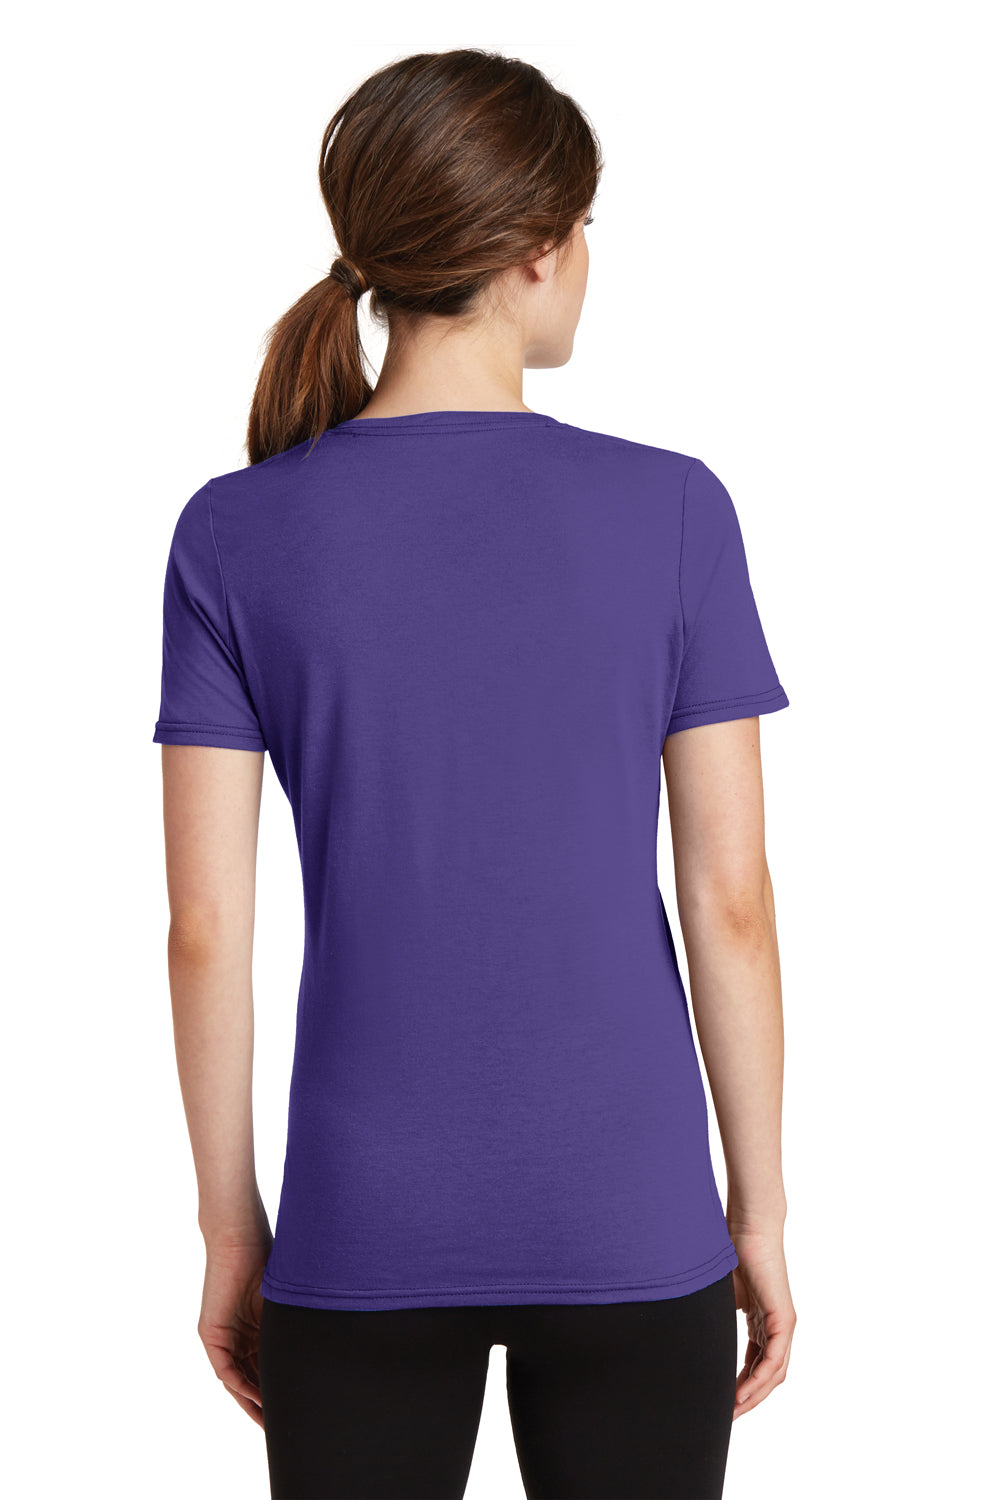 Port & Company LPC381V Womens Dry Zone Performance Moisture Wicking Short Sleeve V-Neck T-Shirt Purple Back